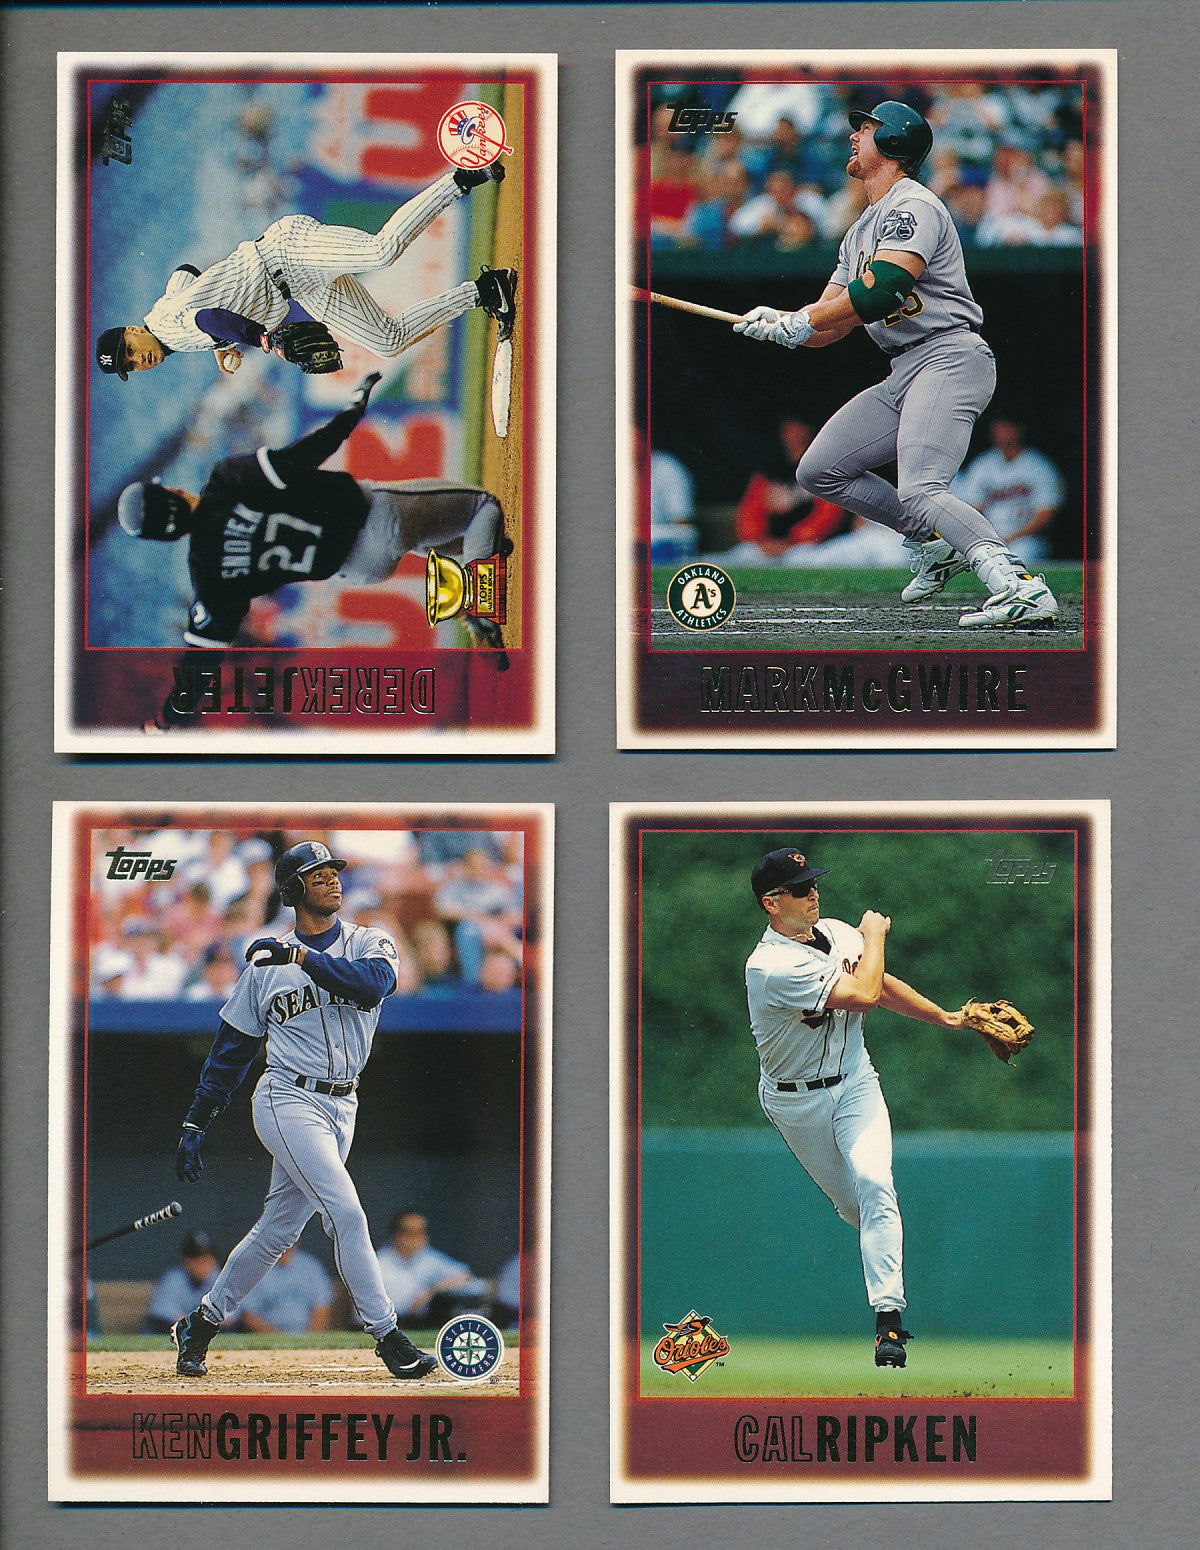 1997 Topps Baseball Complete Set (495)  NM/MT MT